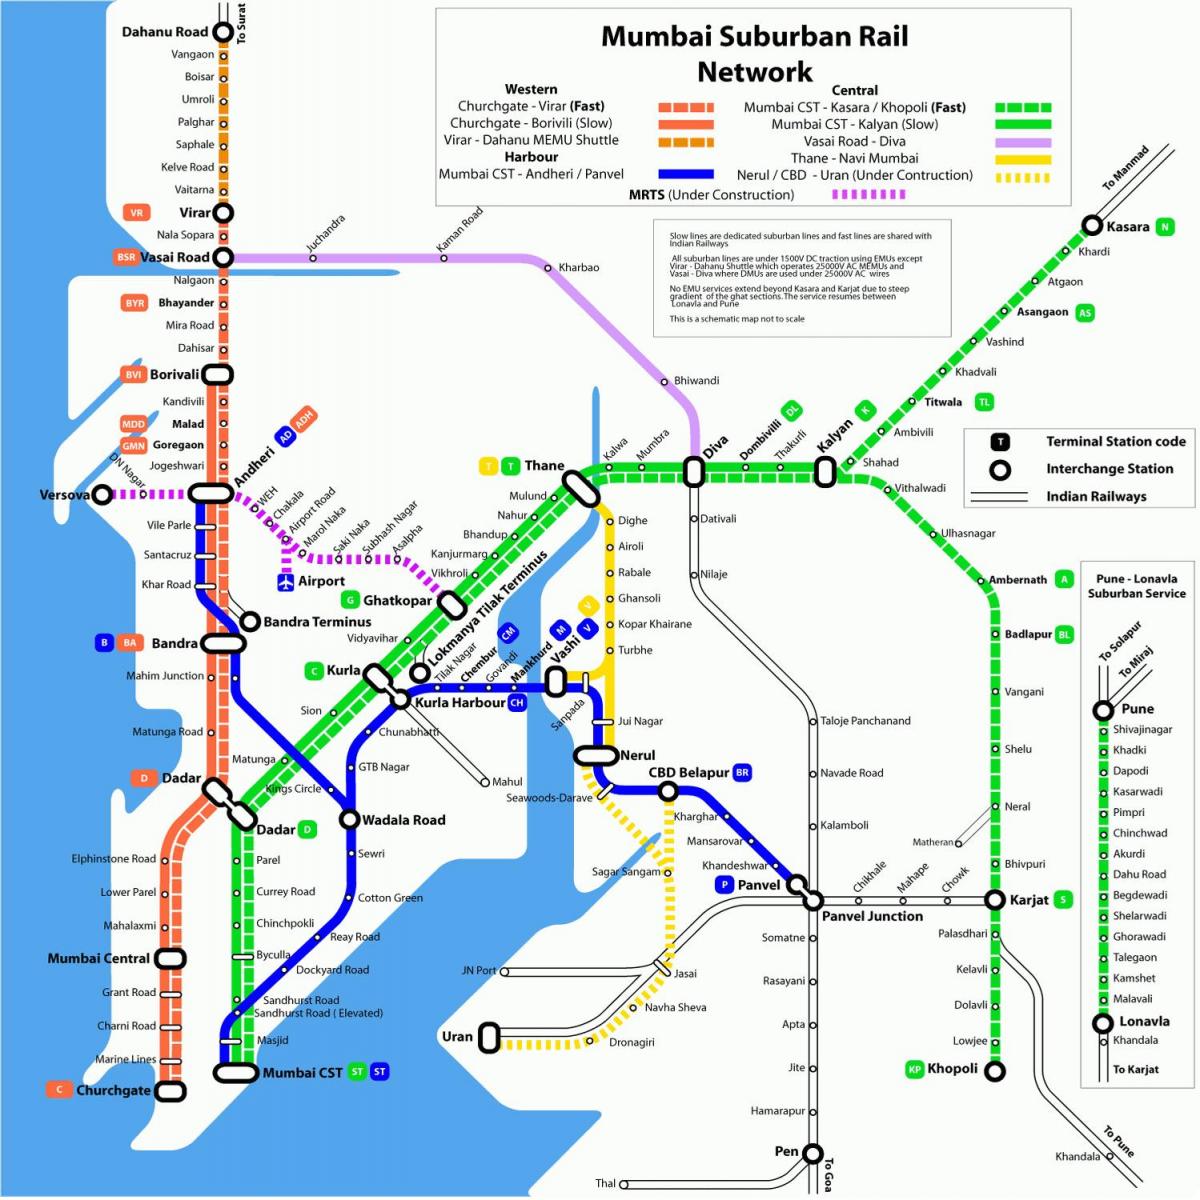 Karte von Mumbai railway